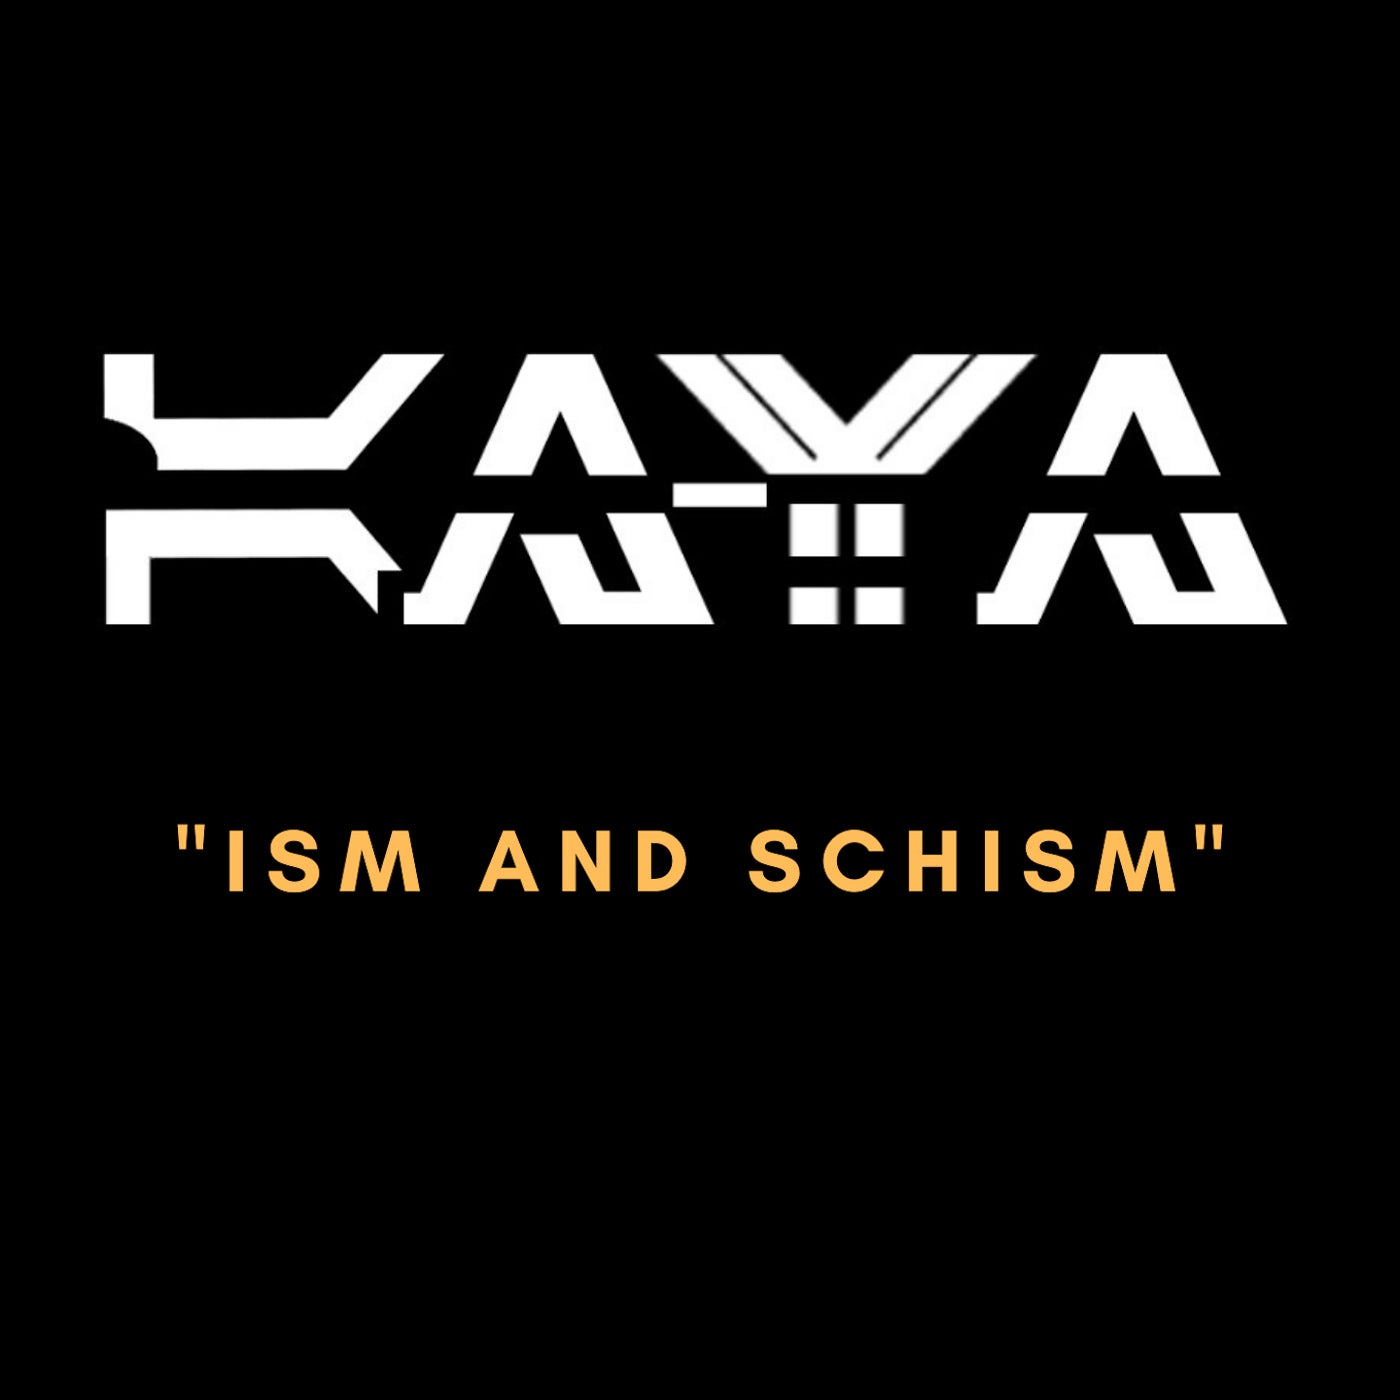 Ka-Ya - Ism And Schism (CMR022)